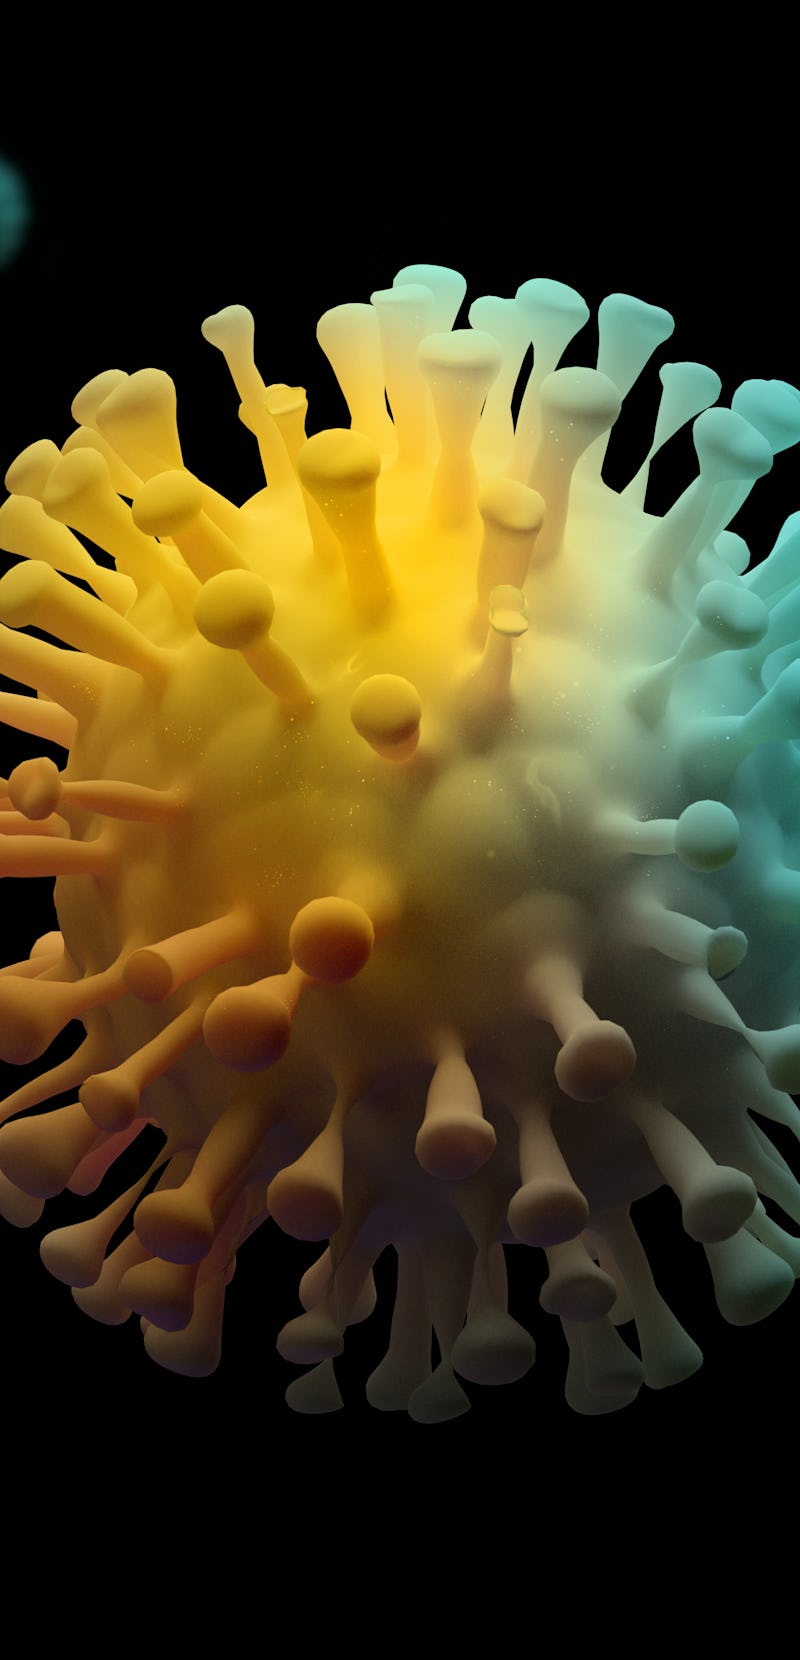 Coronavirus 3d rendering. Illustration showing a structure of the epidemic virus